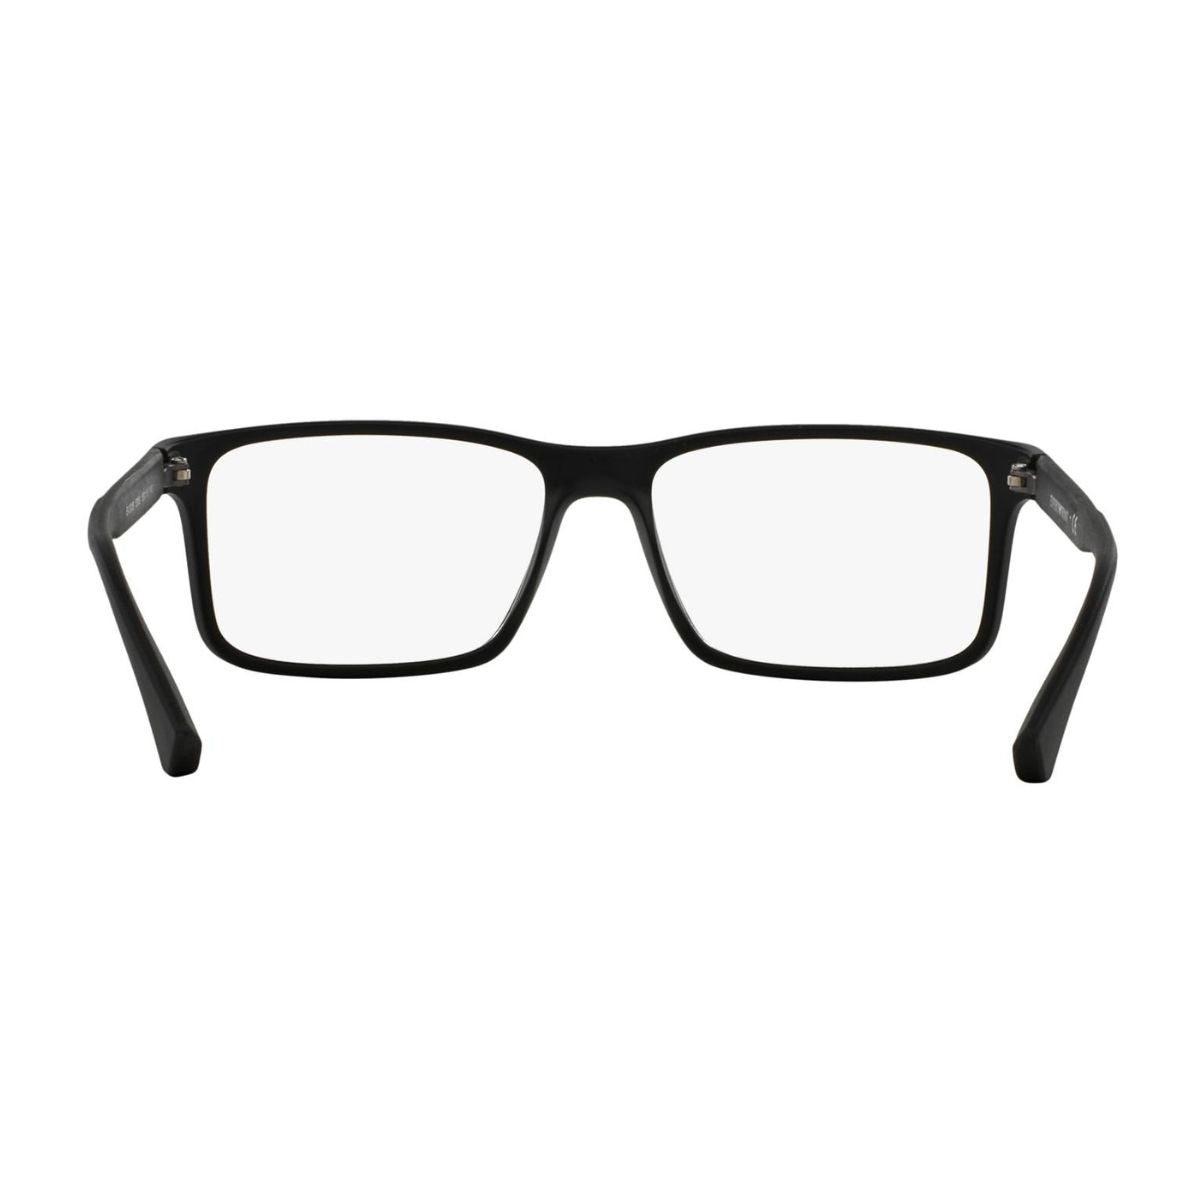 "Buy Online Emporio Armani 3038 5063 Eyeglasses Frame For Men's At Optorium"